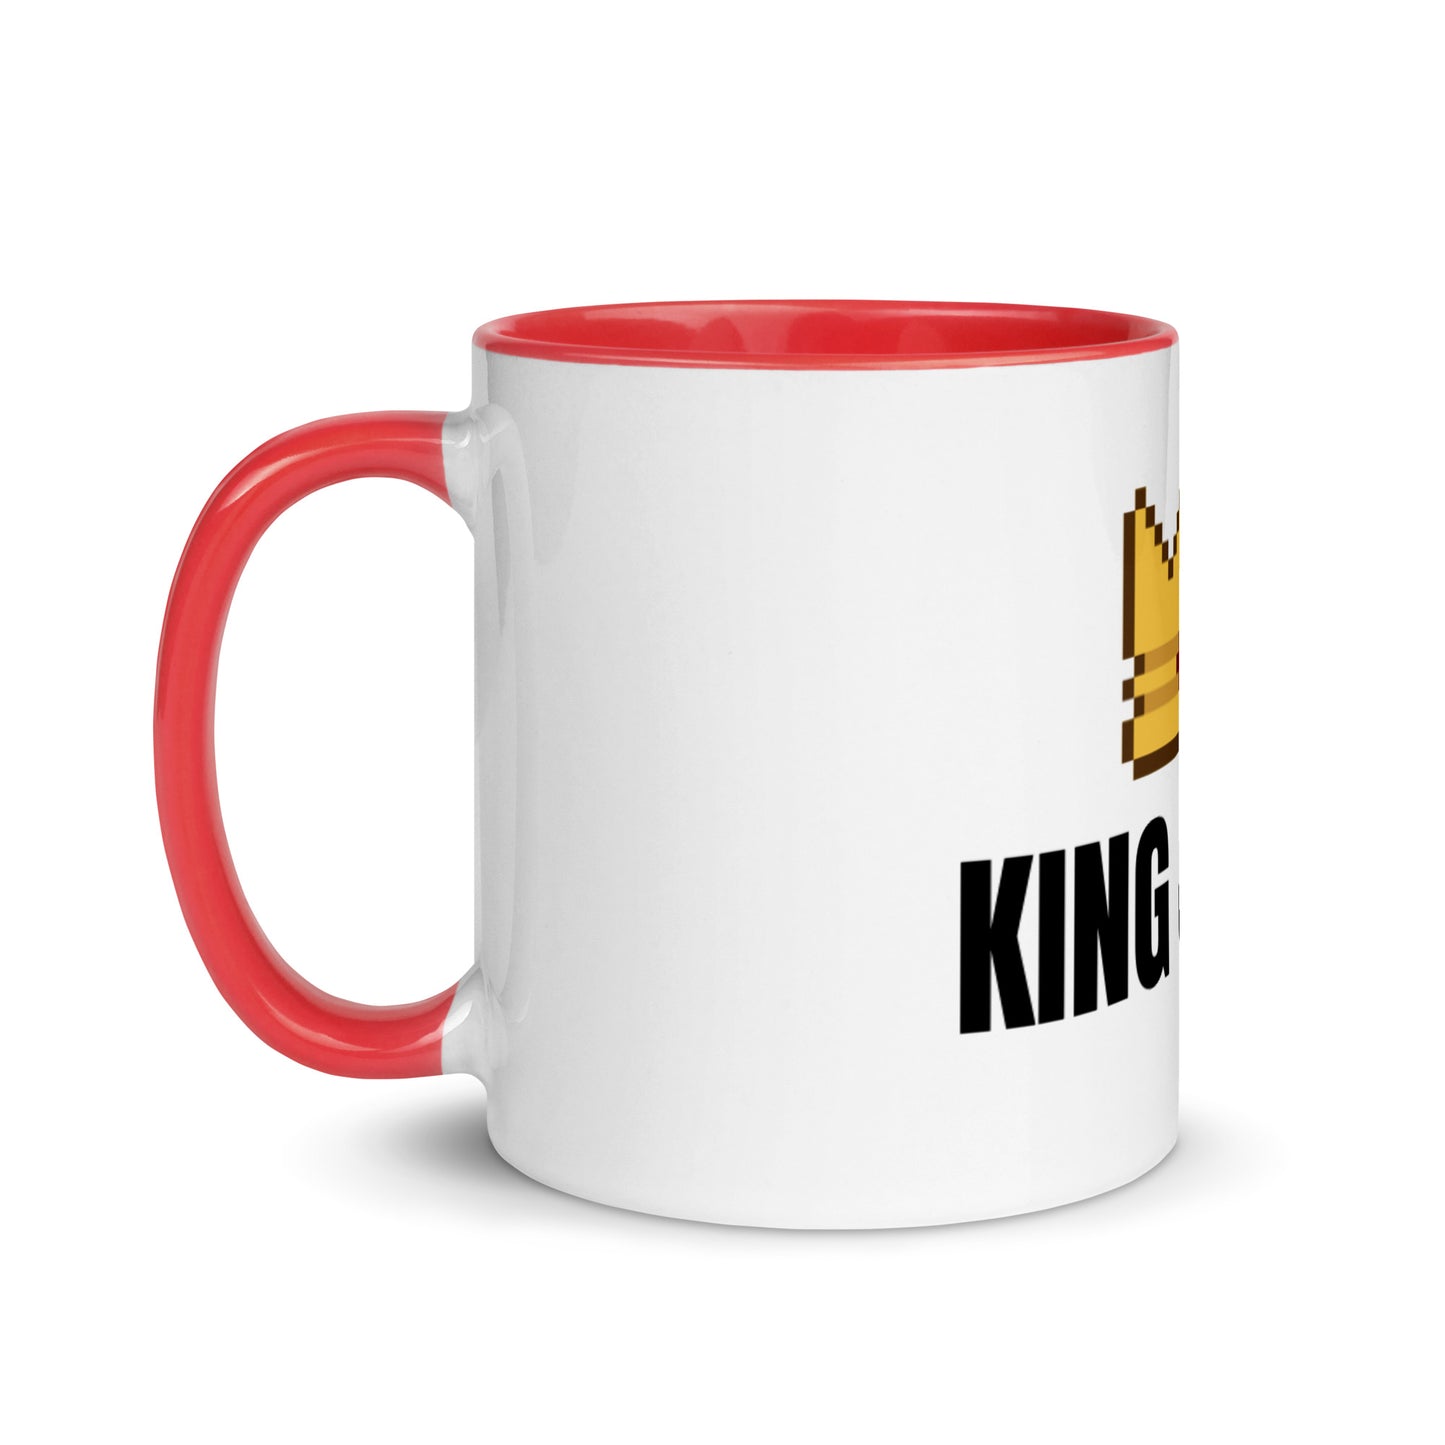 King Jesus White Ceramic Mug with Color Inside